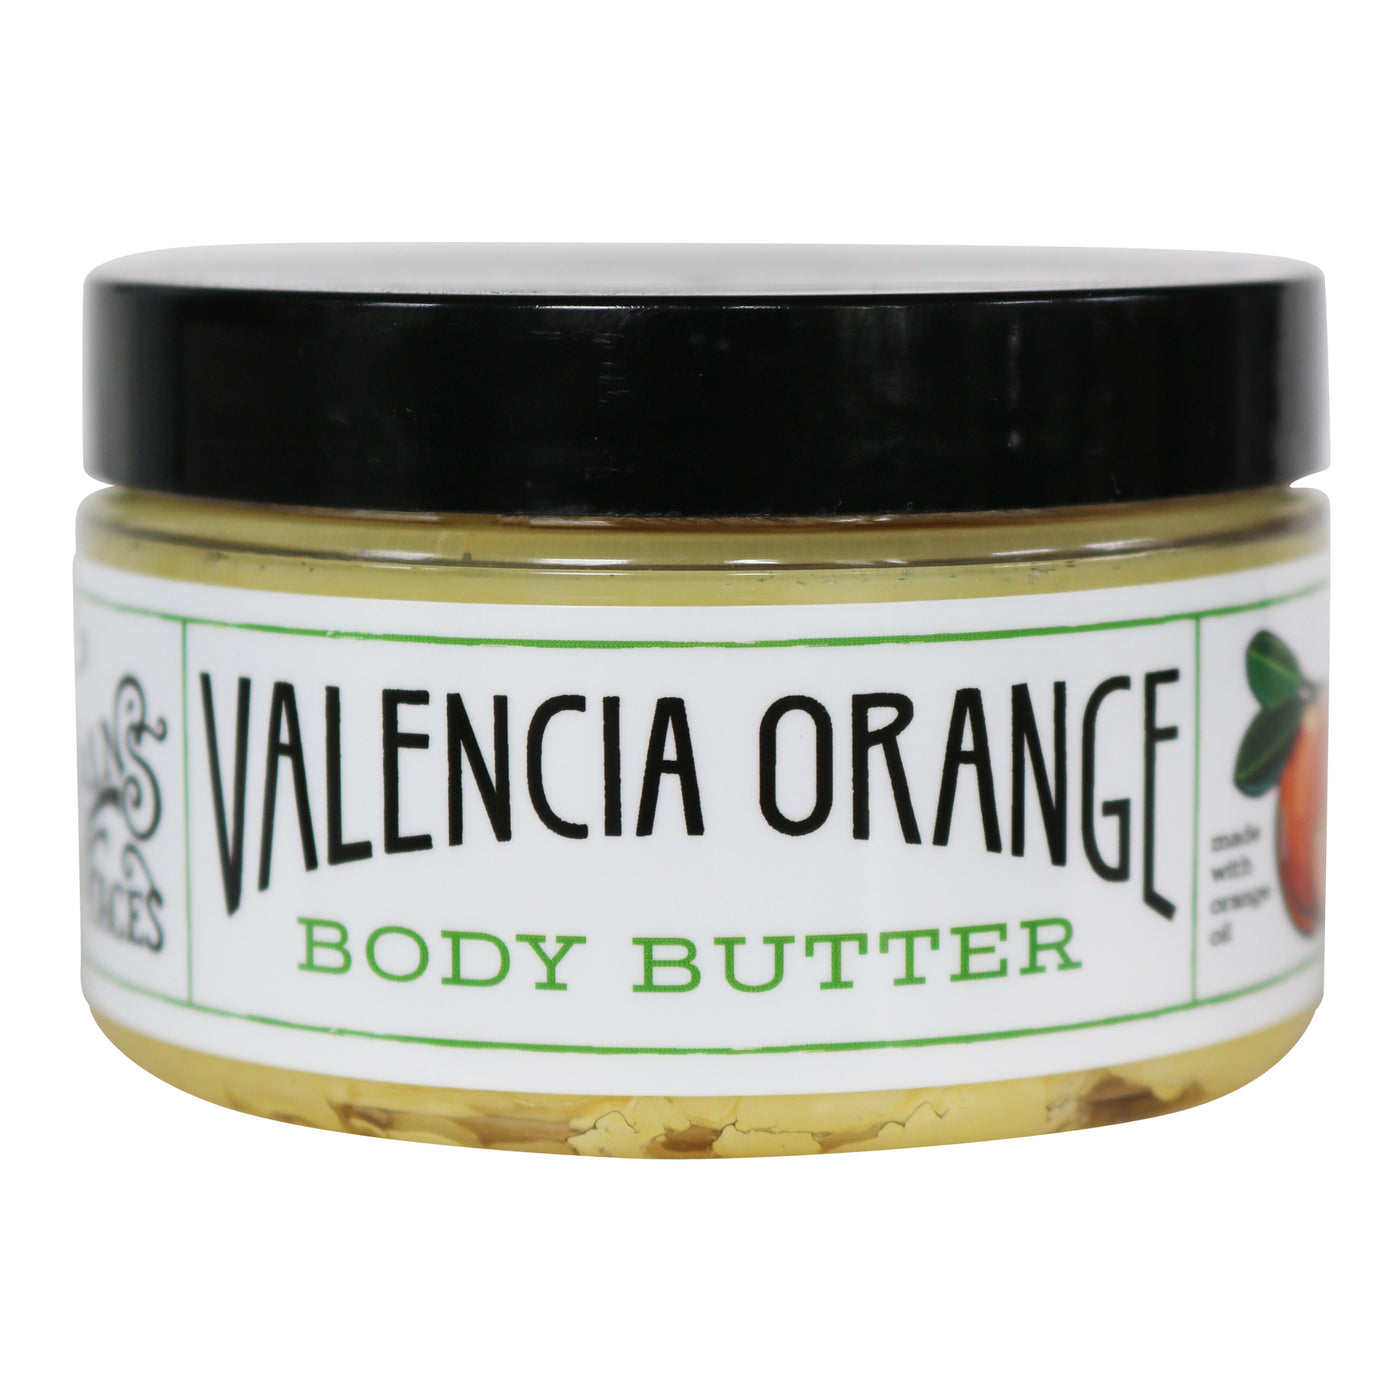 closed 8oz container of the valencia orange body butter moisturizer